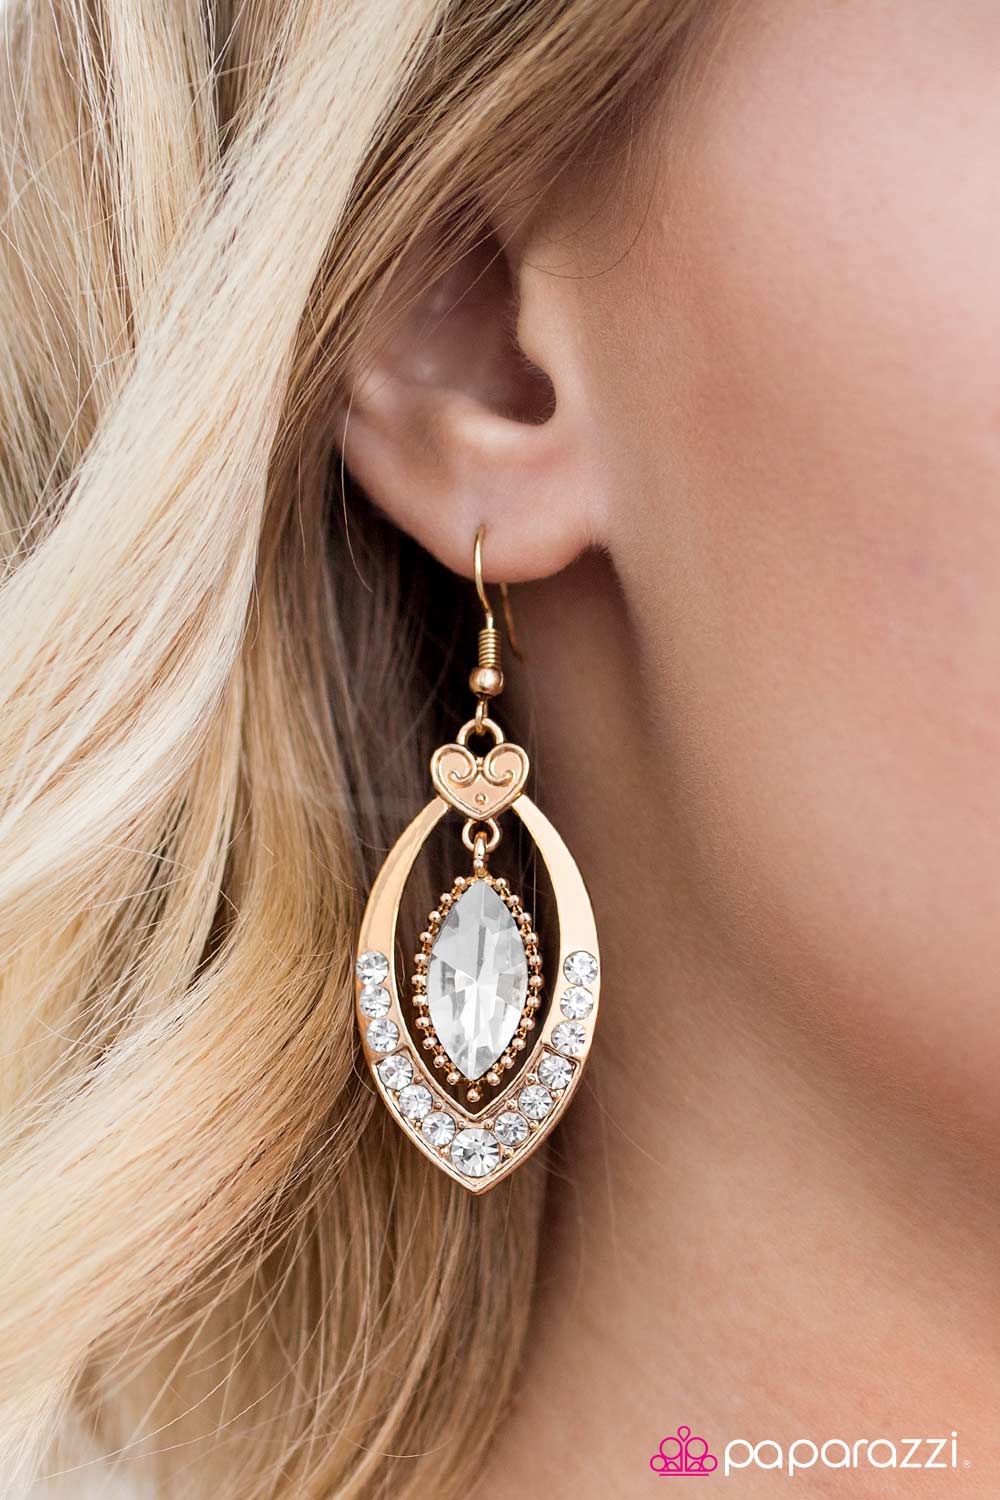 Royal Honeymoon - Paparazzi earrings